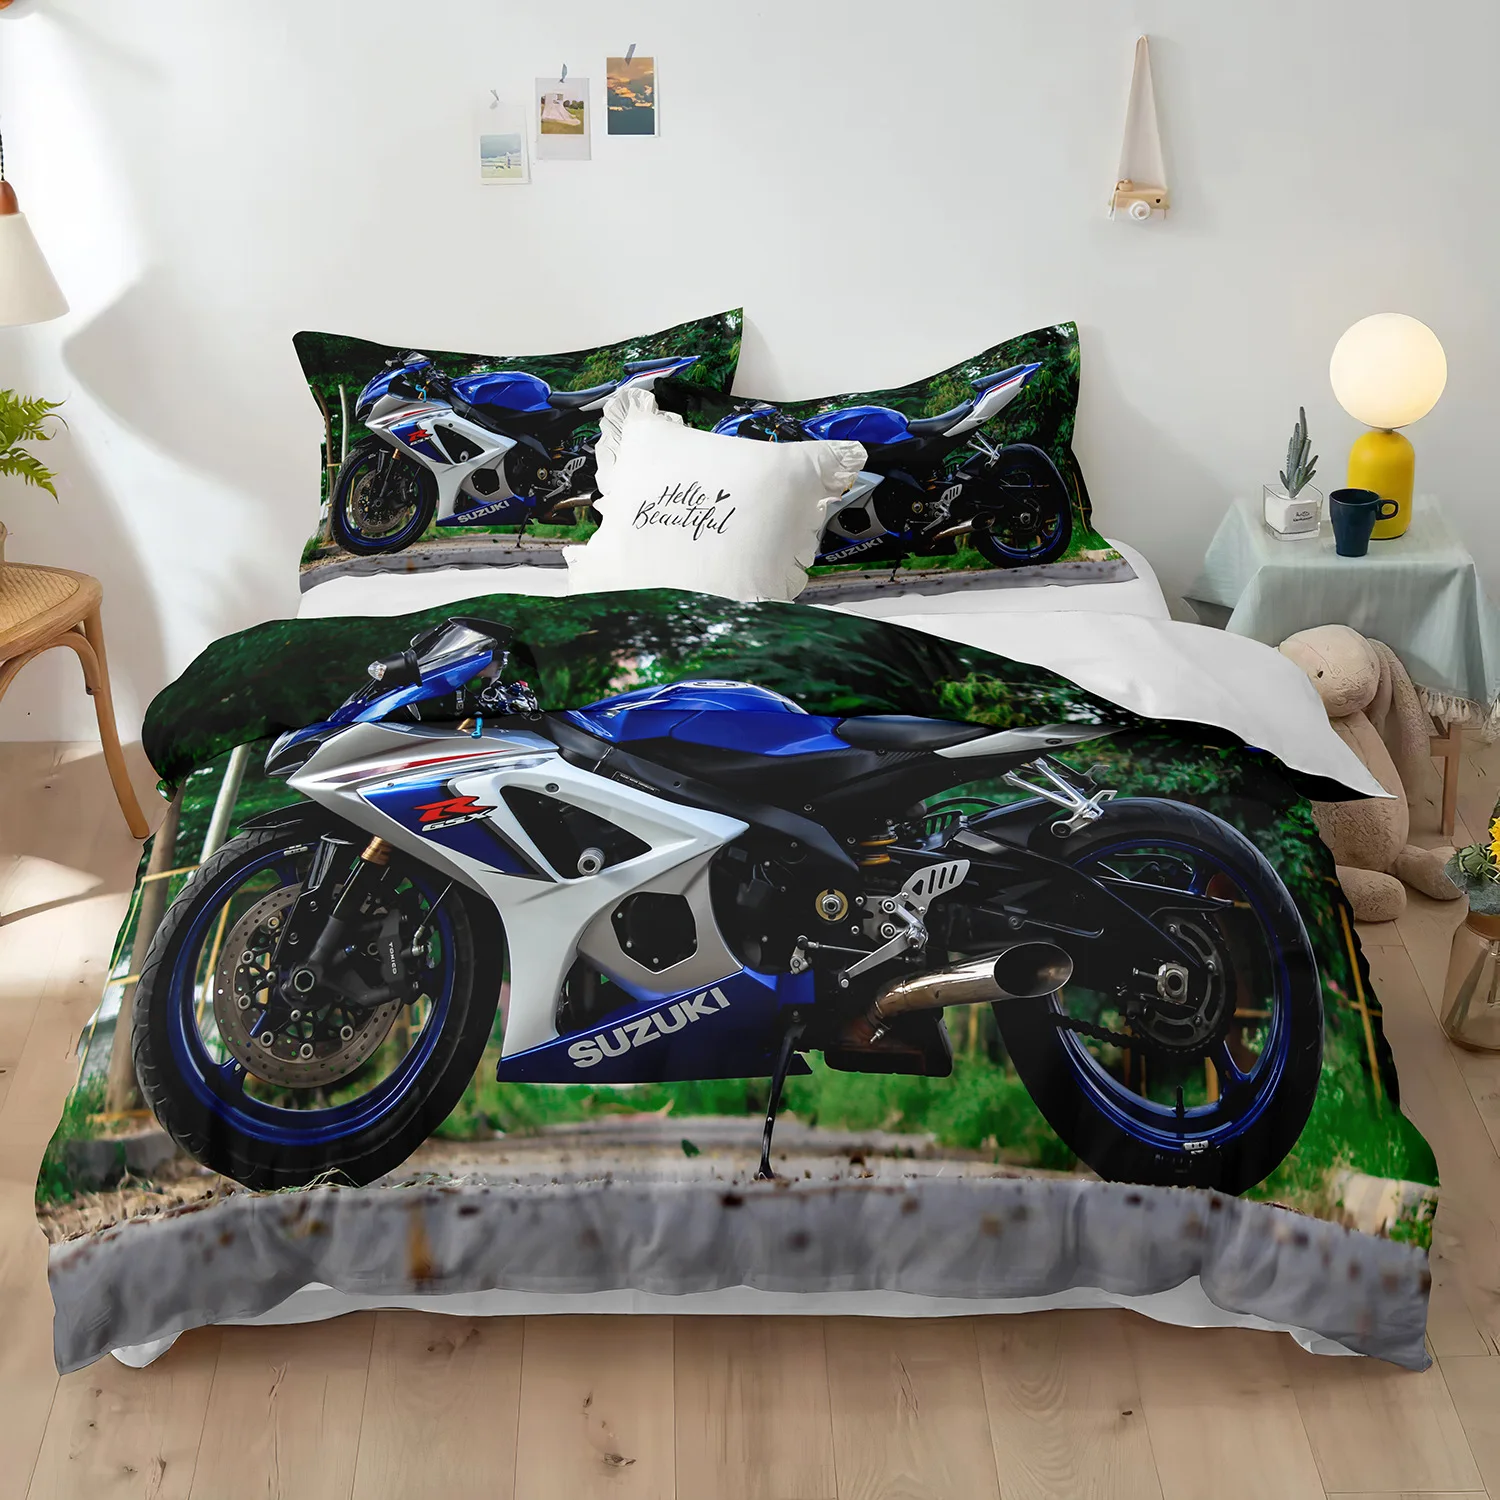 

Dirt Bike Duvet Cover Set 3D Racing Motocross Bedding Set for Teen Motorcycle Rider Extreme Sports Polyester Comforter Cover